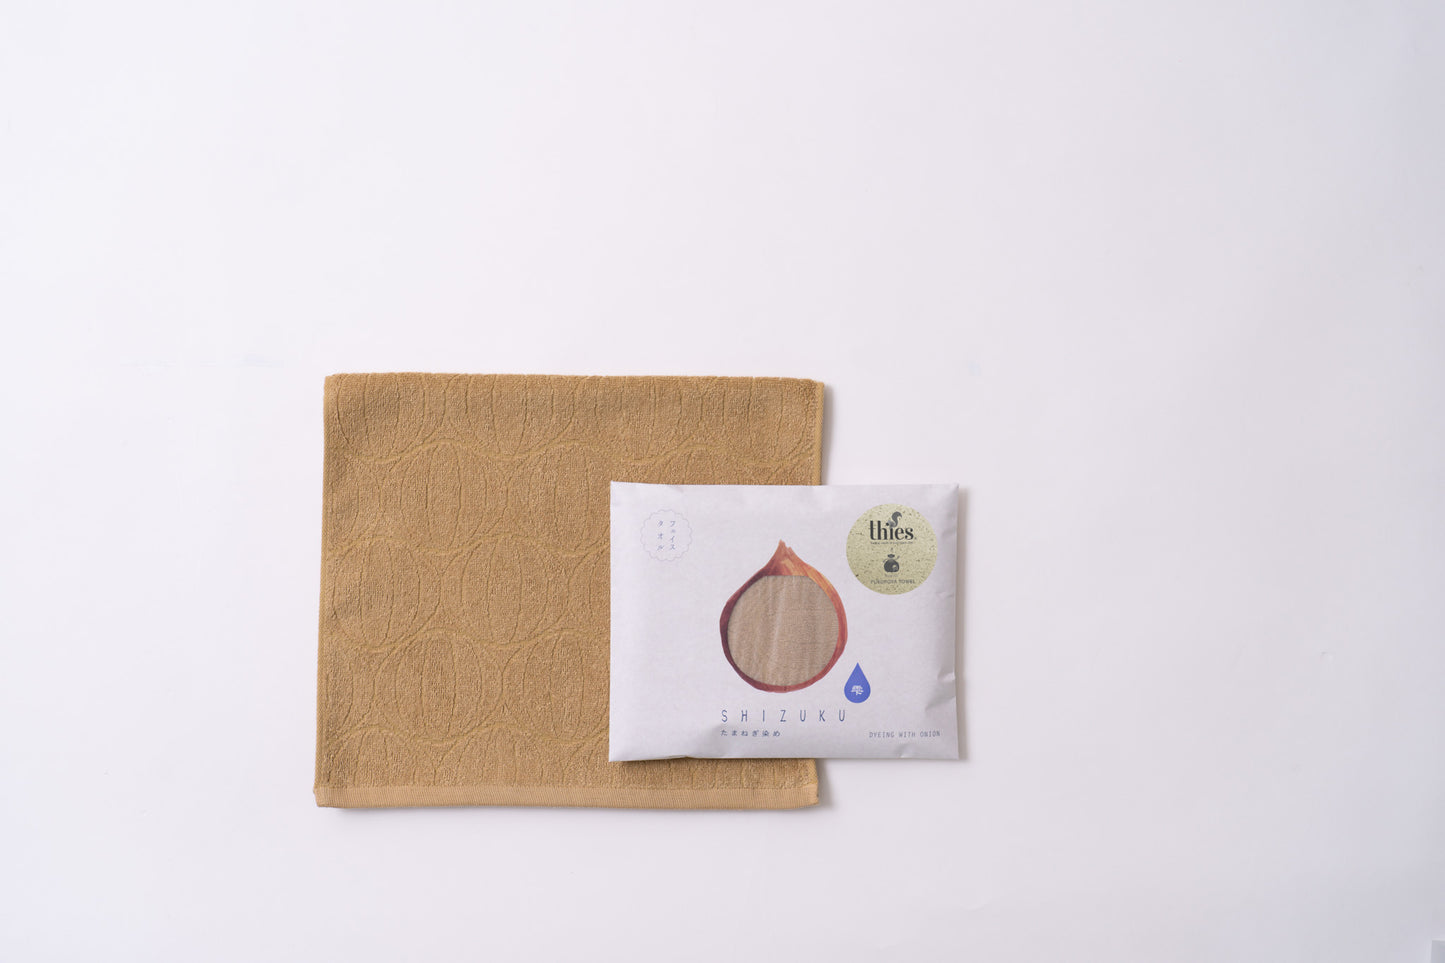 thies 1856 ® x Fukuroya Shizuku Guest & Face Towel natural dyed brown onion